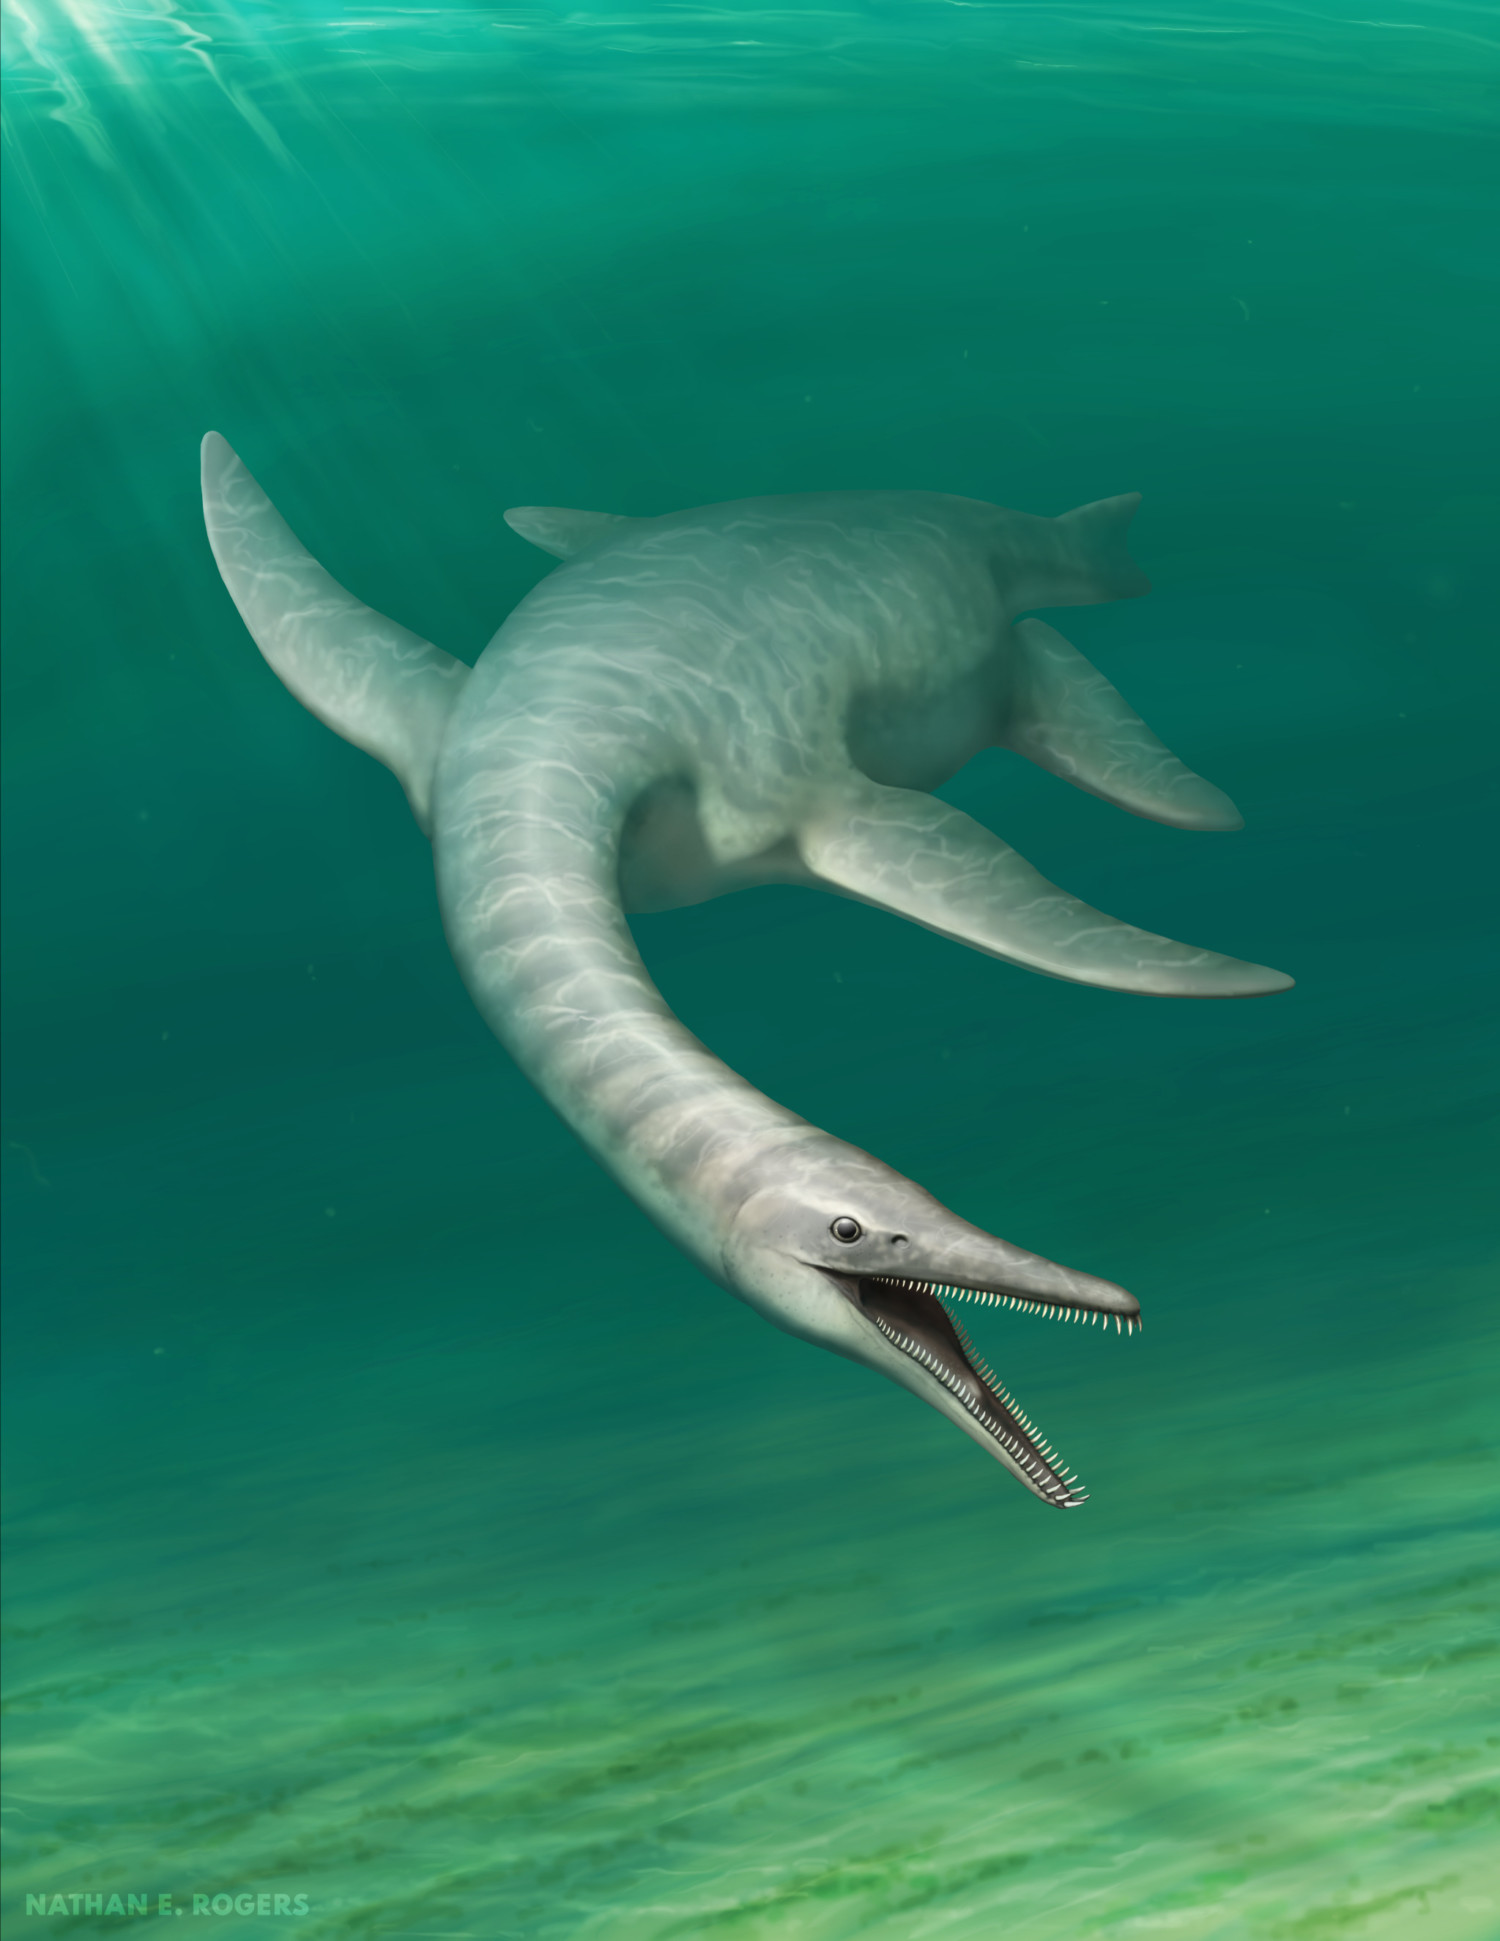 Illustration of new species Serpentisuchops pfisterae